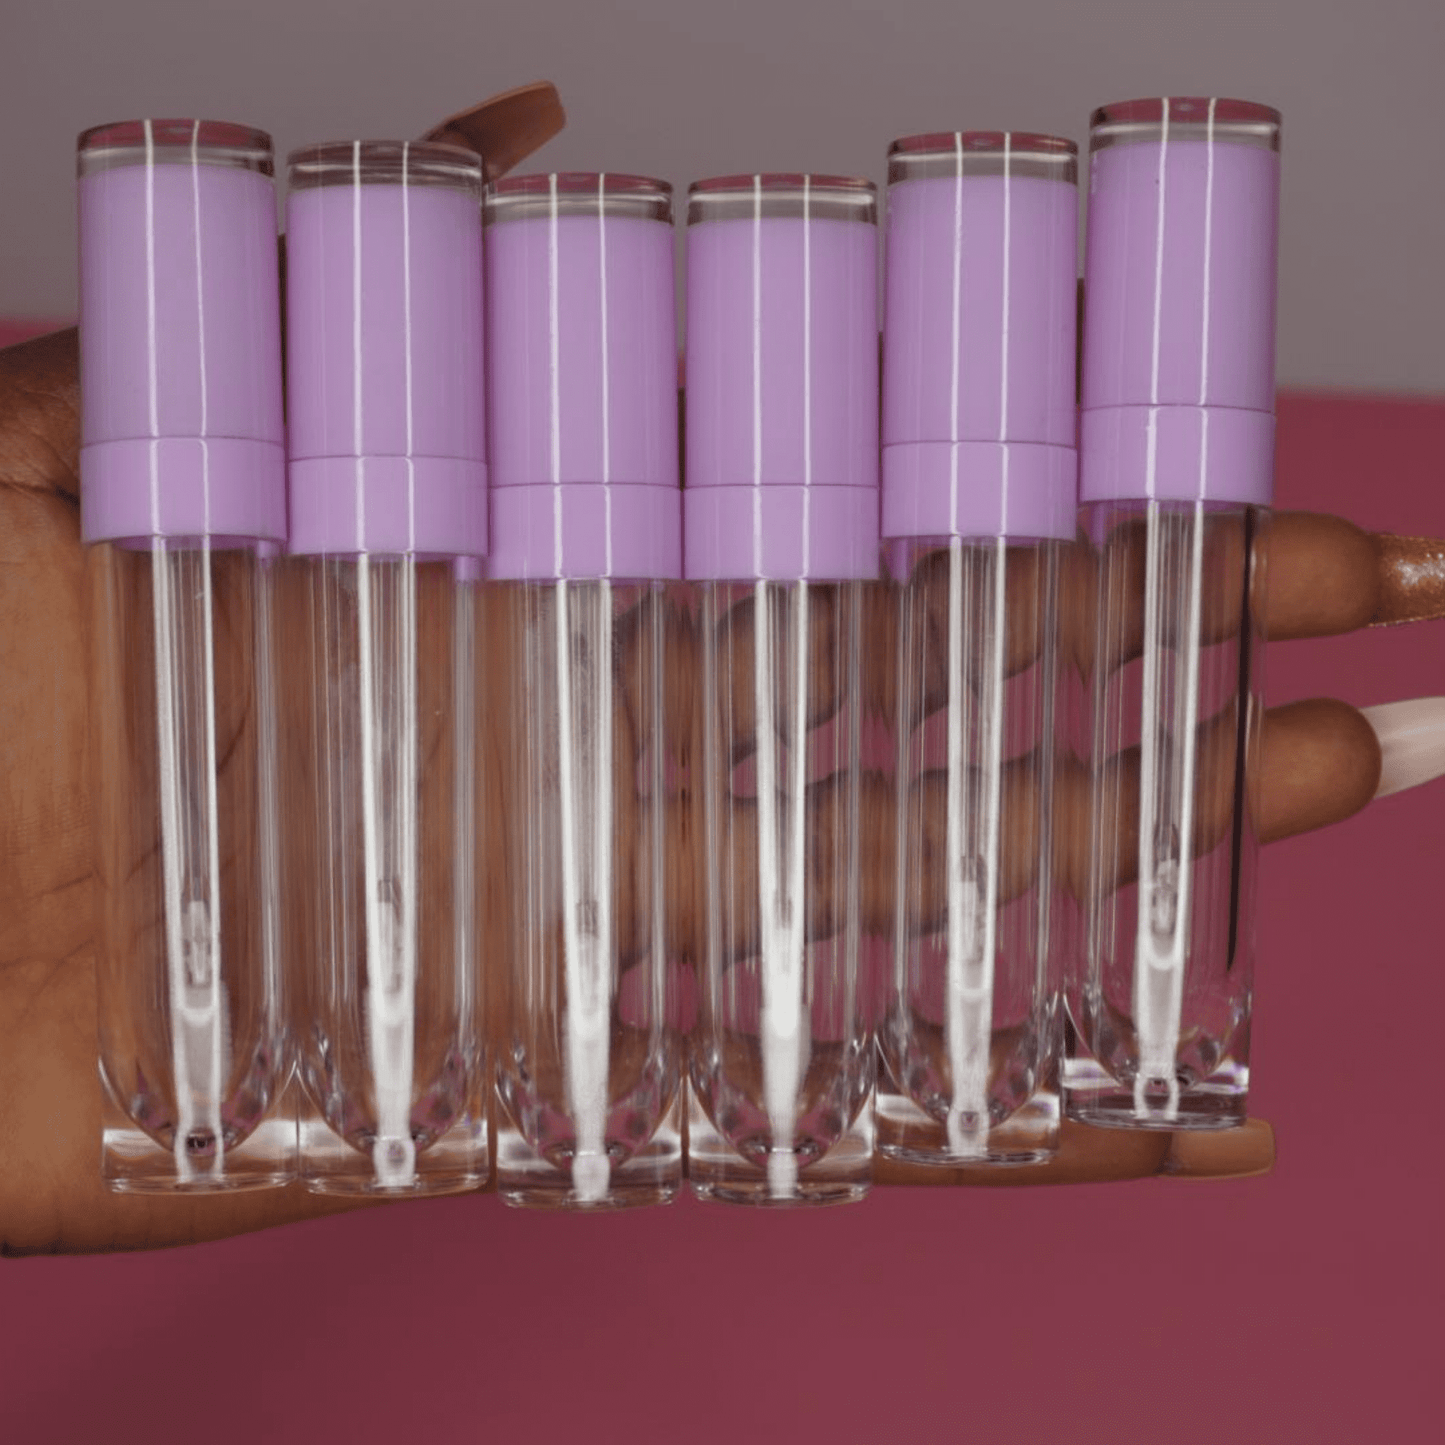 10 PACK 6ML Purple Lip Gloss Tubes Vide En gros avec baguette applicateur  Bulk Lipgloss Supplies Wholesale Cosmetic -  France